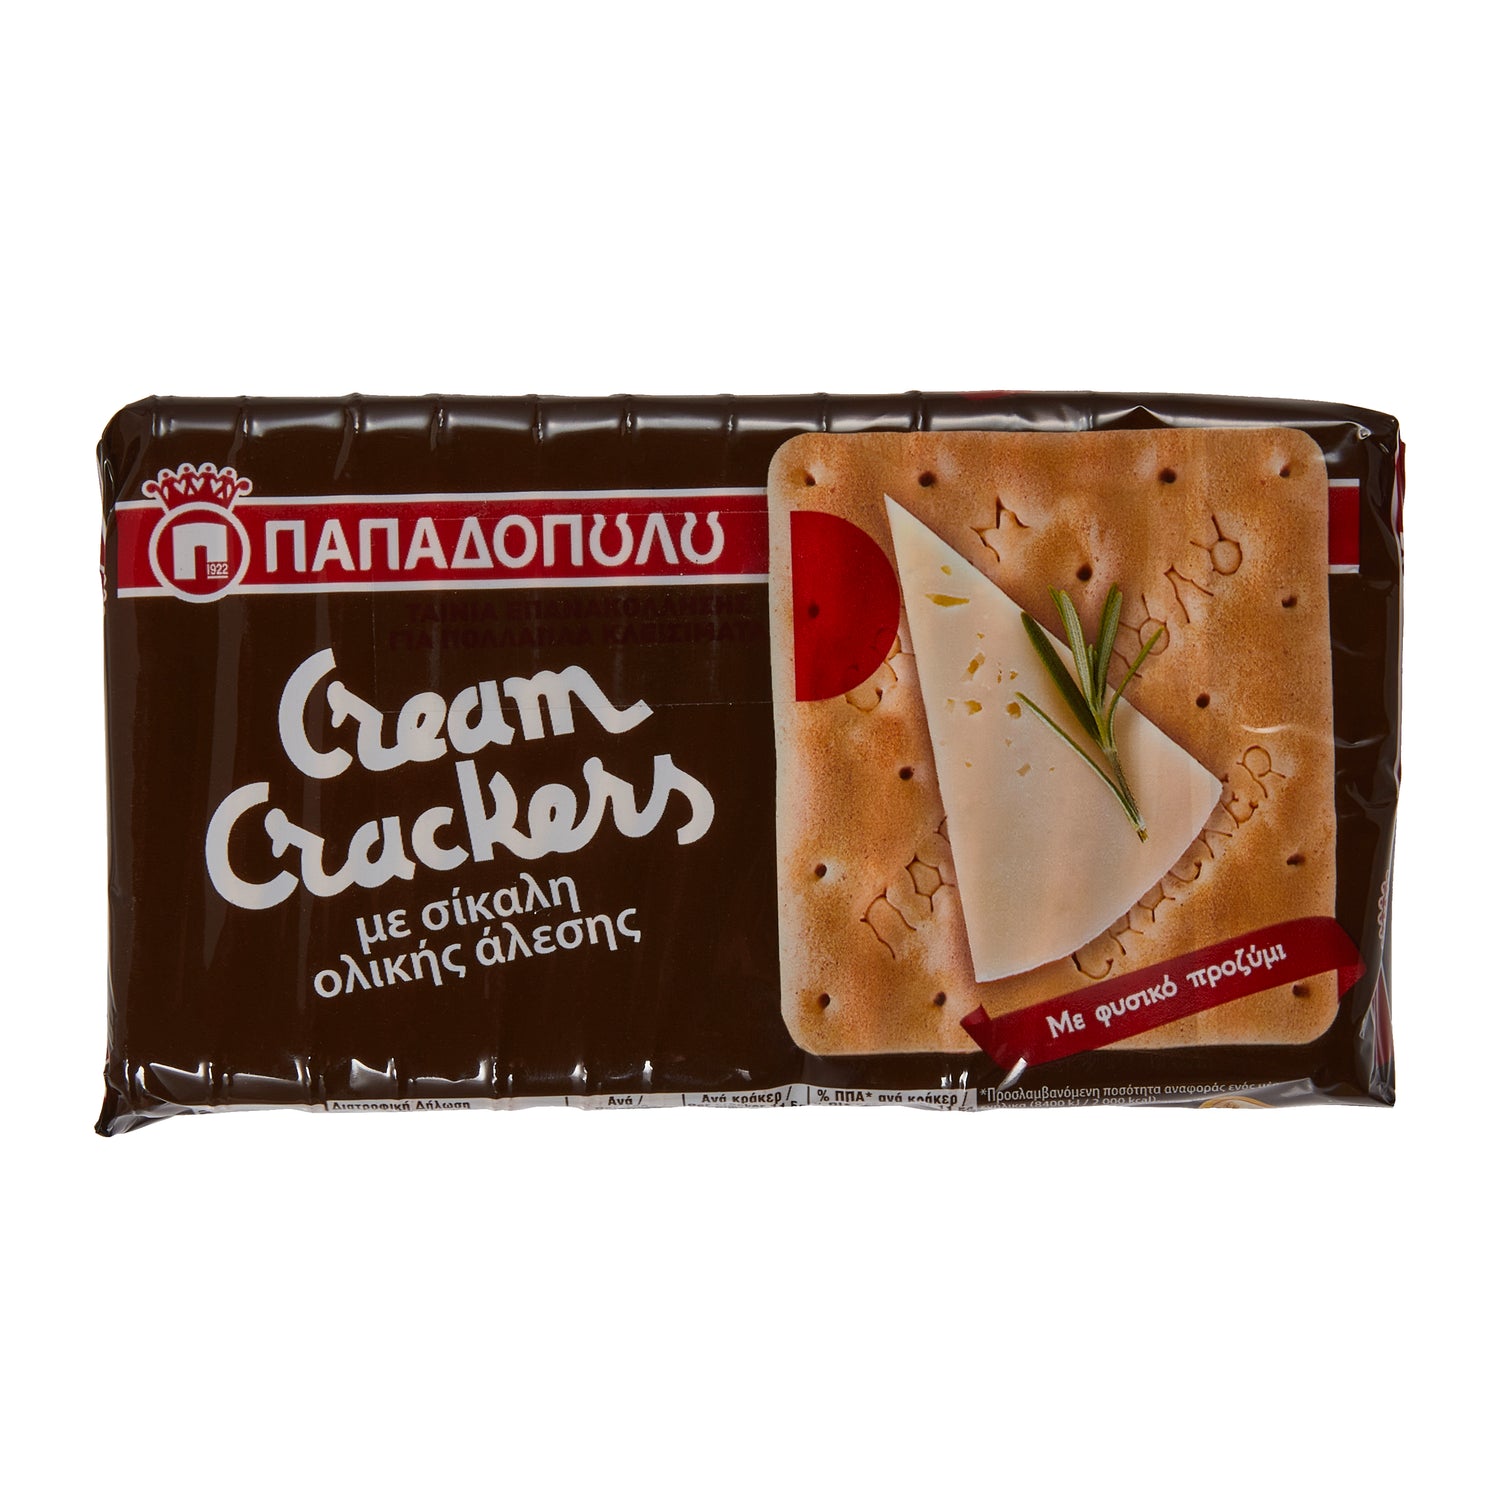 Cream Crackers Braun Papadopoulou 175 g